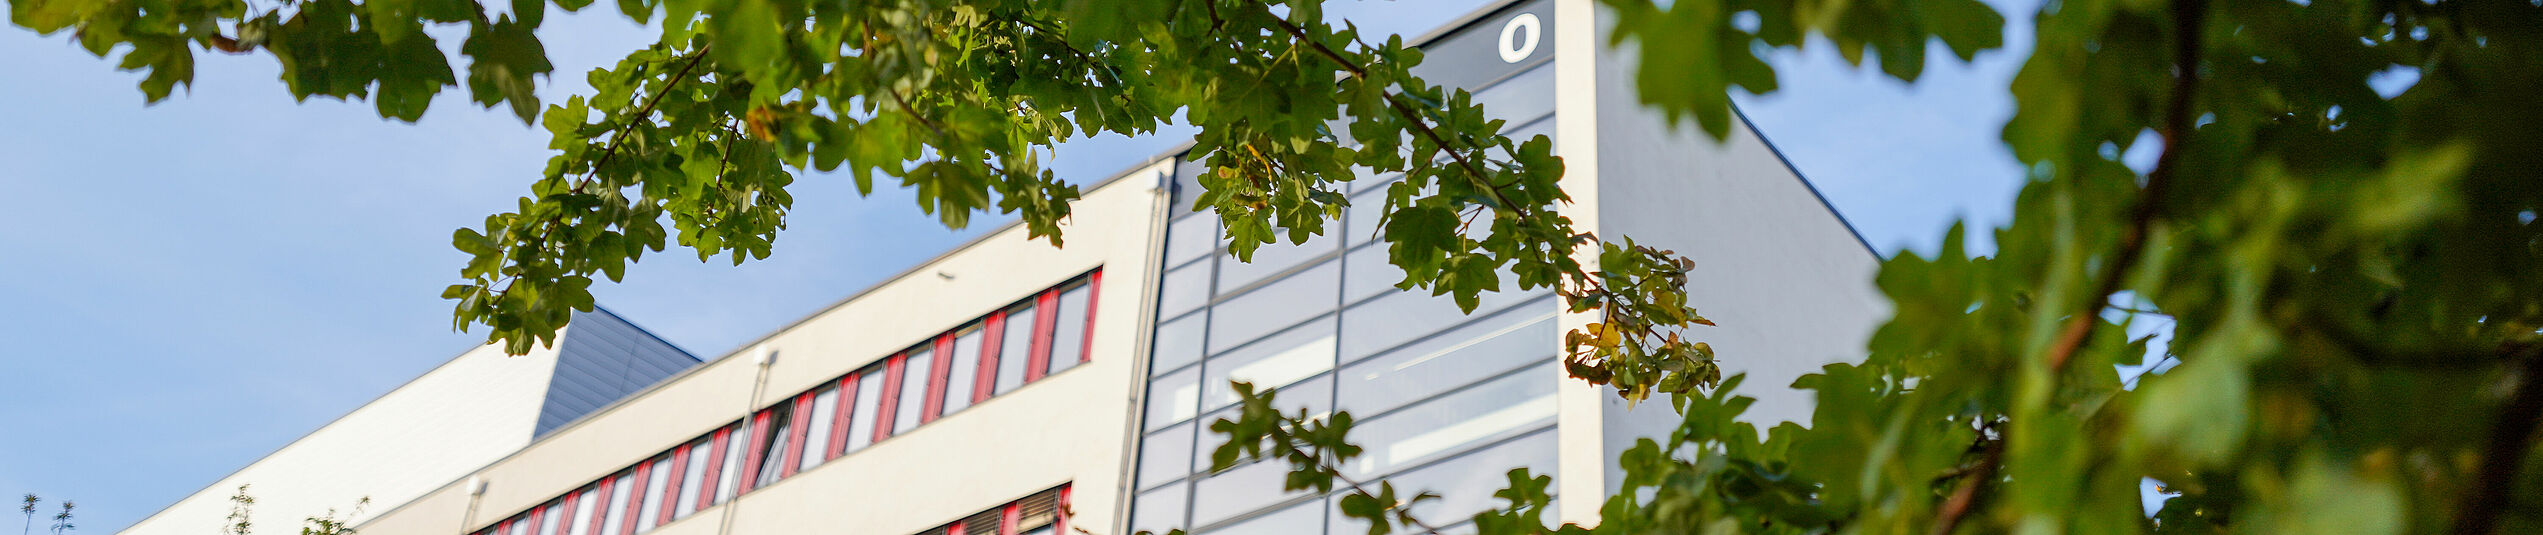 Gebäude O der Universität Paderborn.